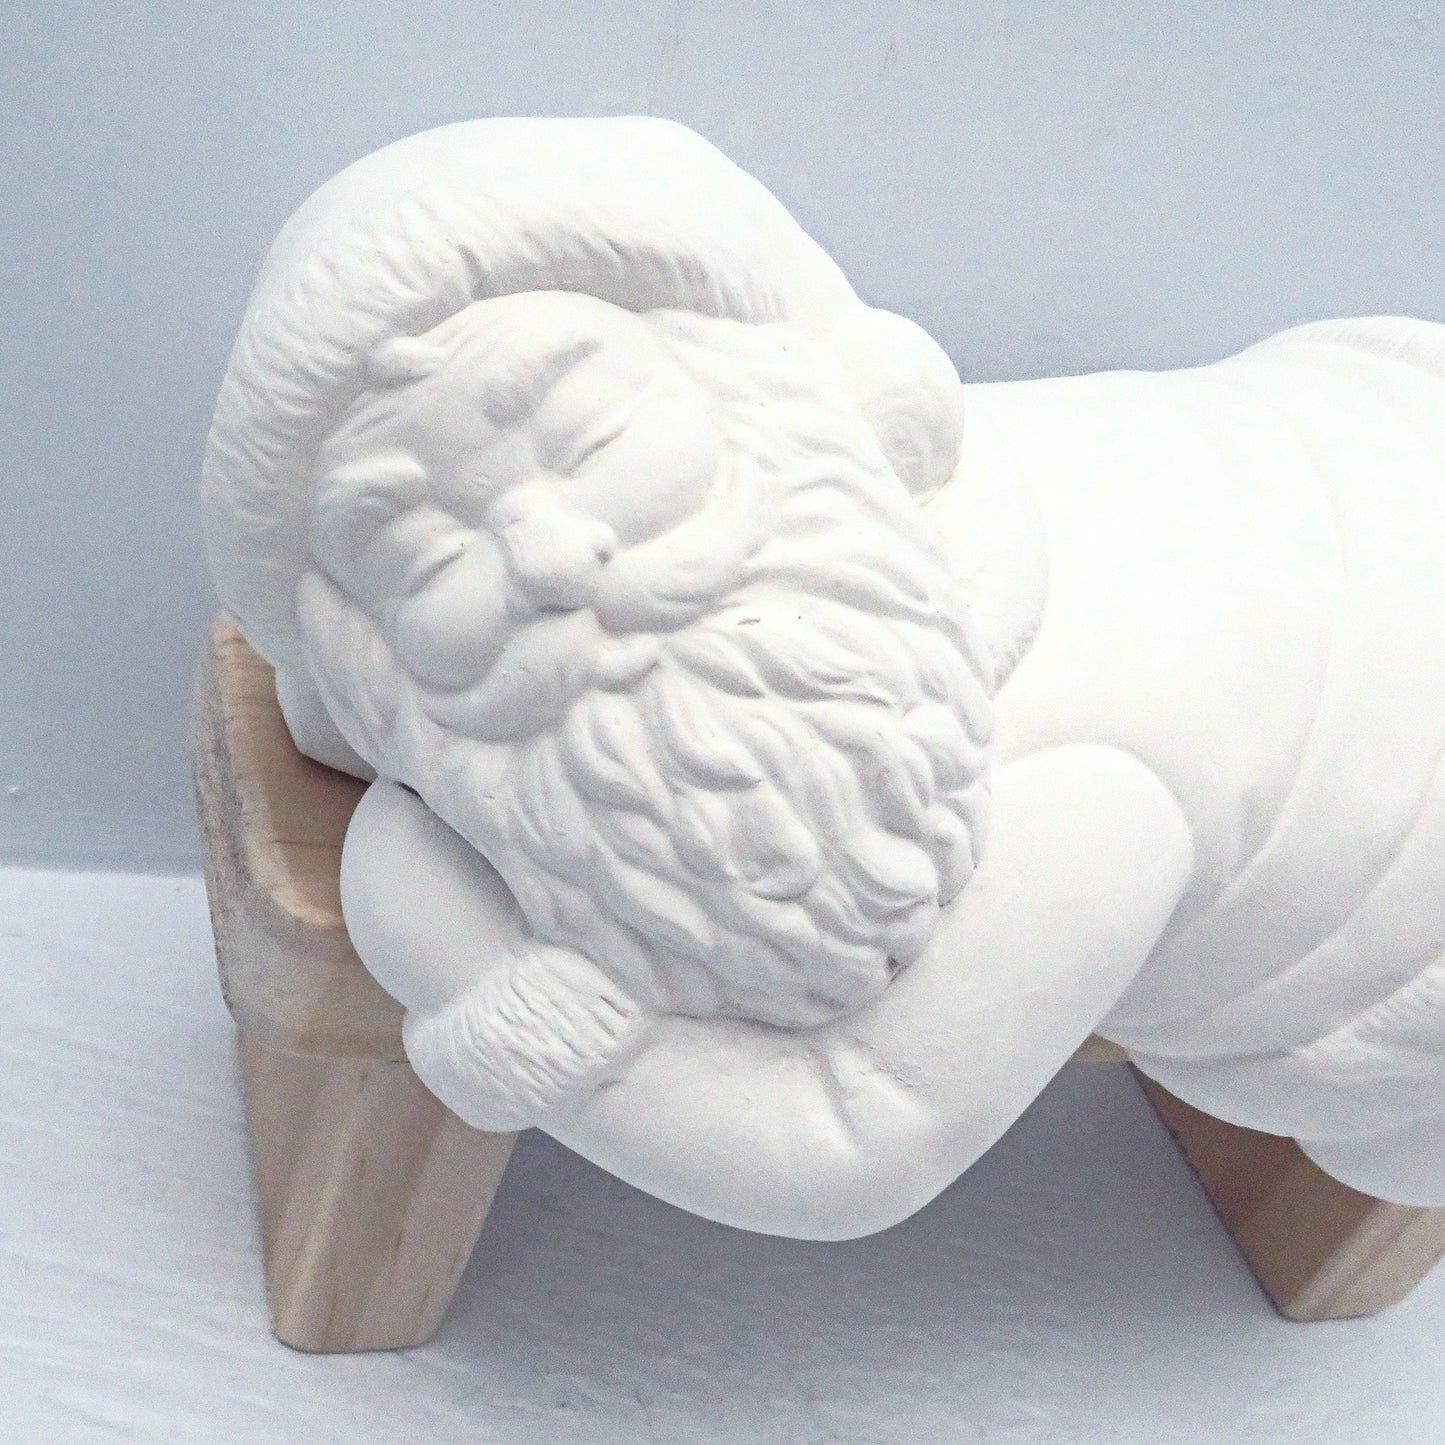 Handmade Ceramic Bisque Santa Figurine / Christmas Decor / Shelf Santa / Ready to Paint Santa Statue / Ceramics to Paint / Paint It Yourself